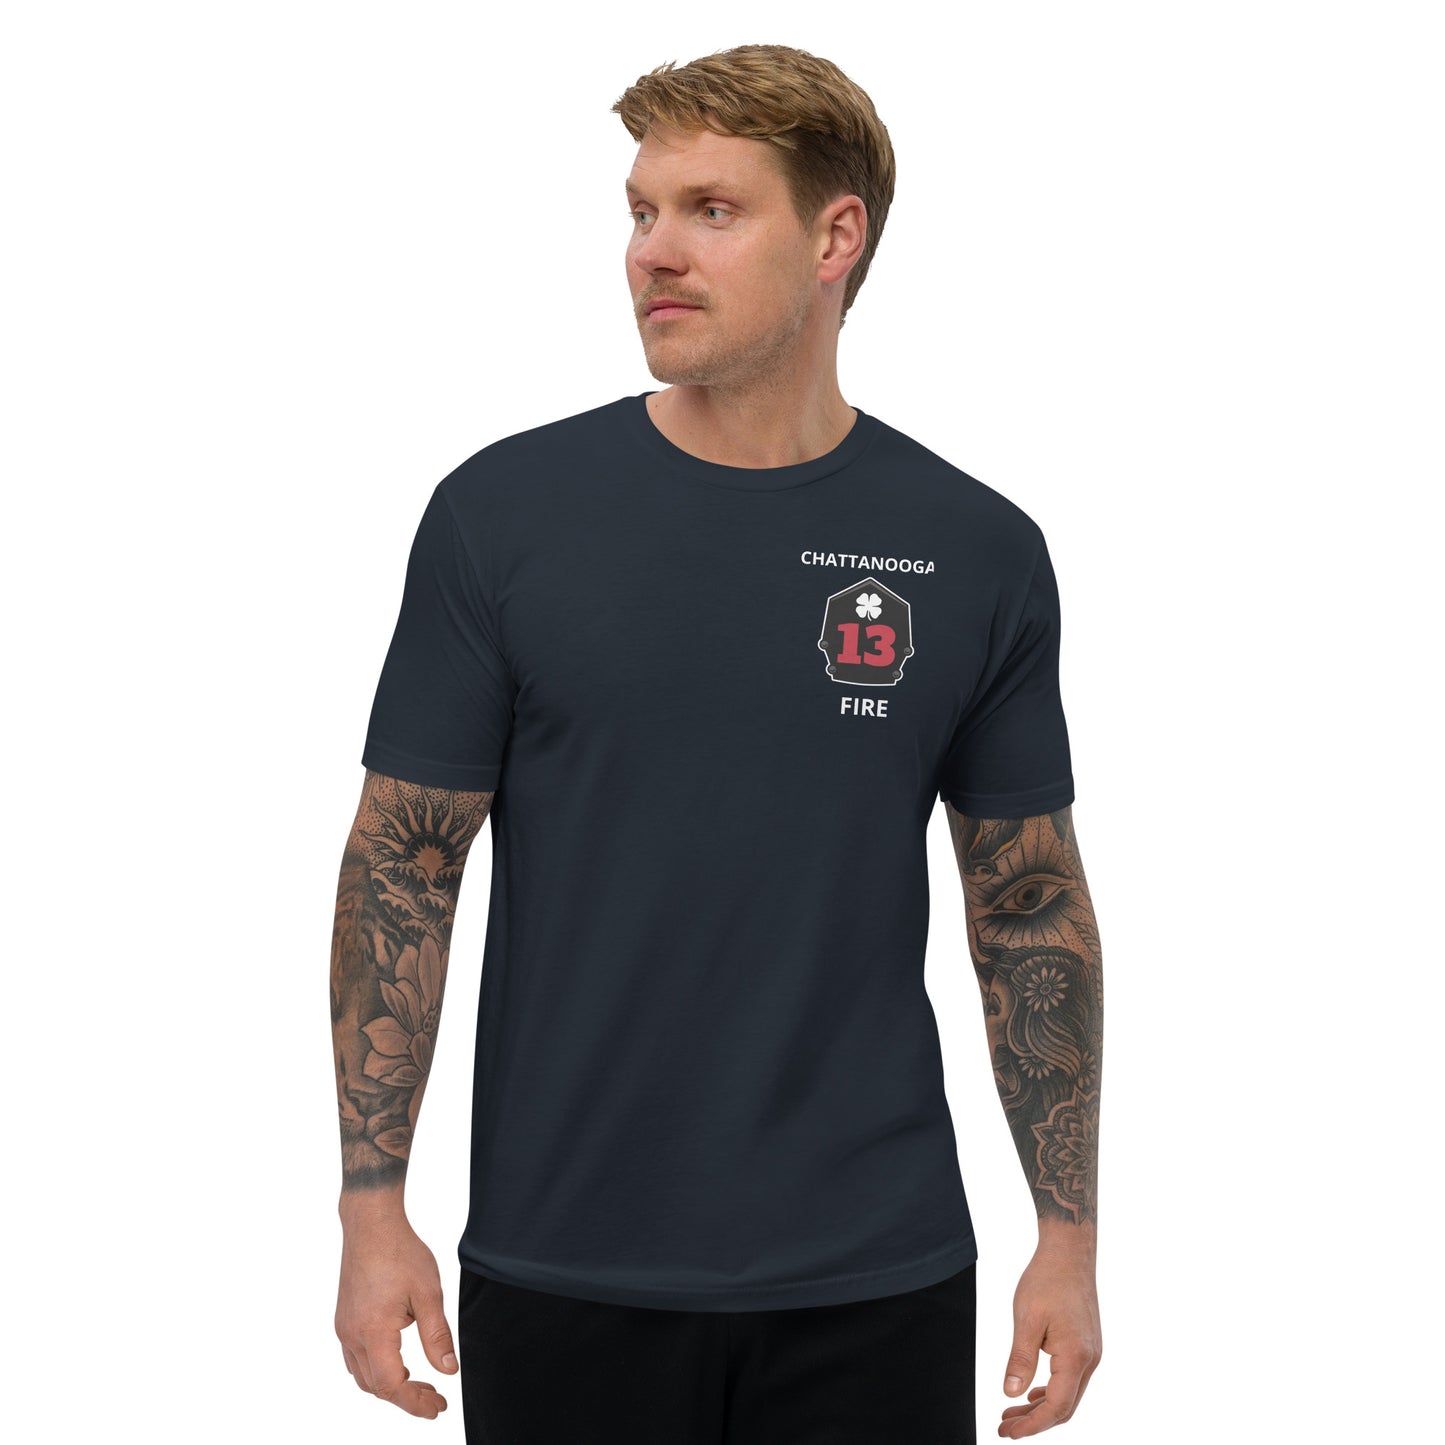 CFD Station 13 Short Sleeve T-shirt